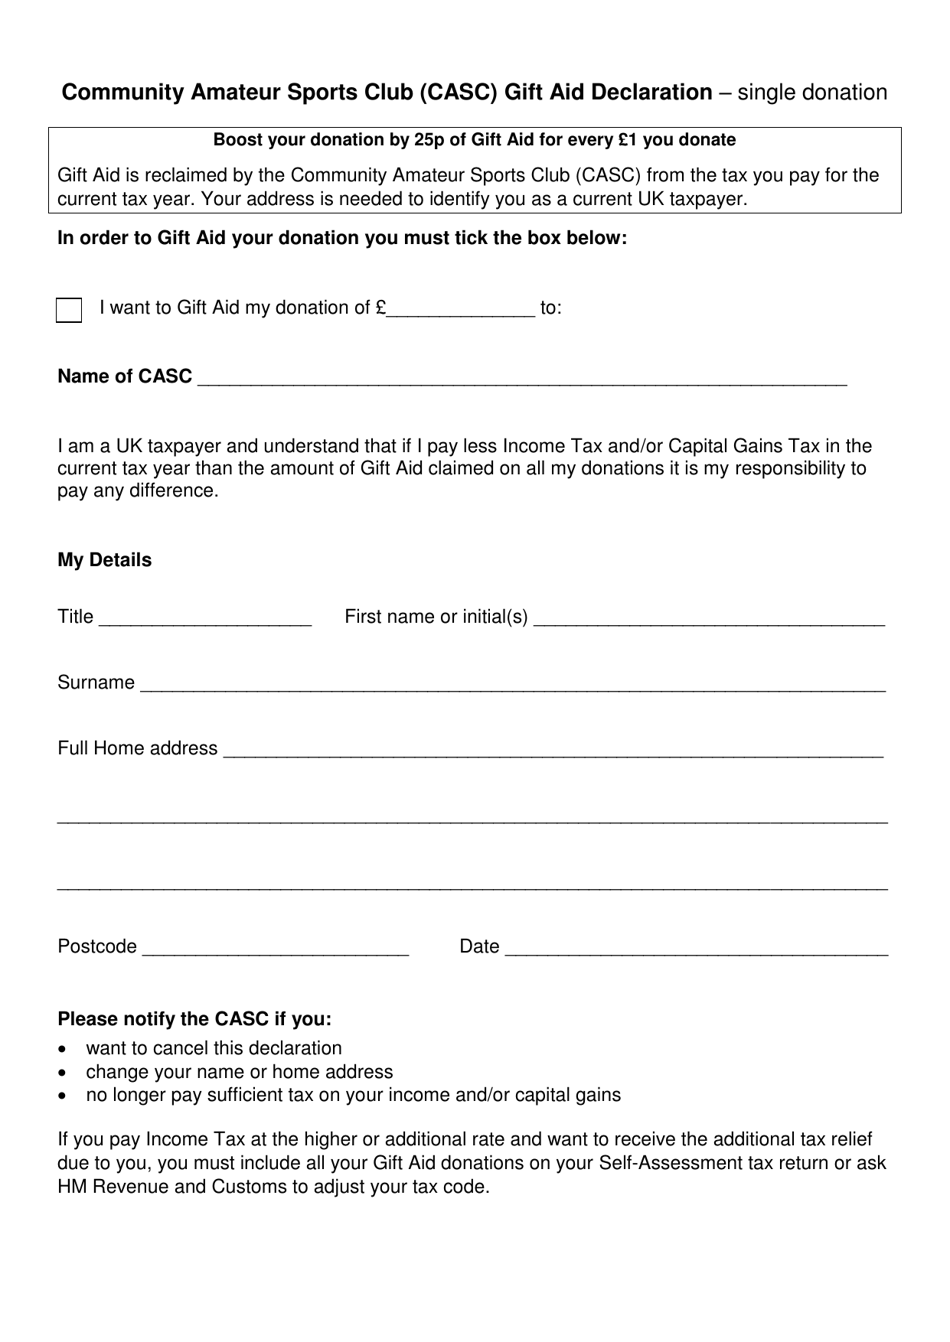 Community Amateur Sports Club (CASC) Gift Aid Declaration - Single Donation - United Kingdom, Page 1